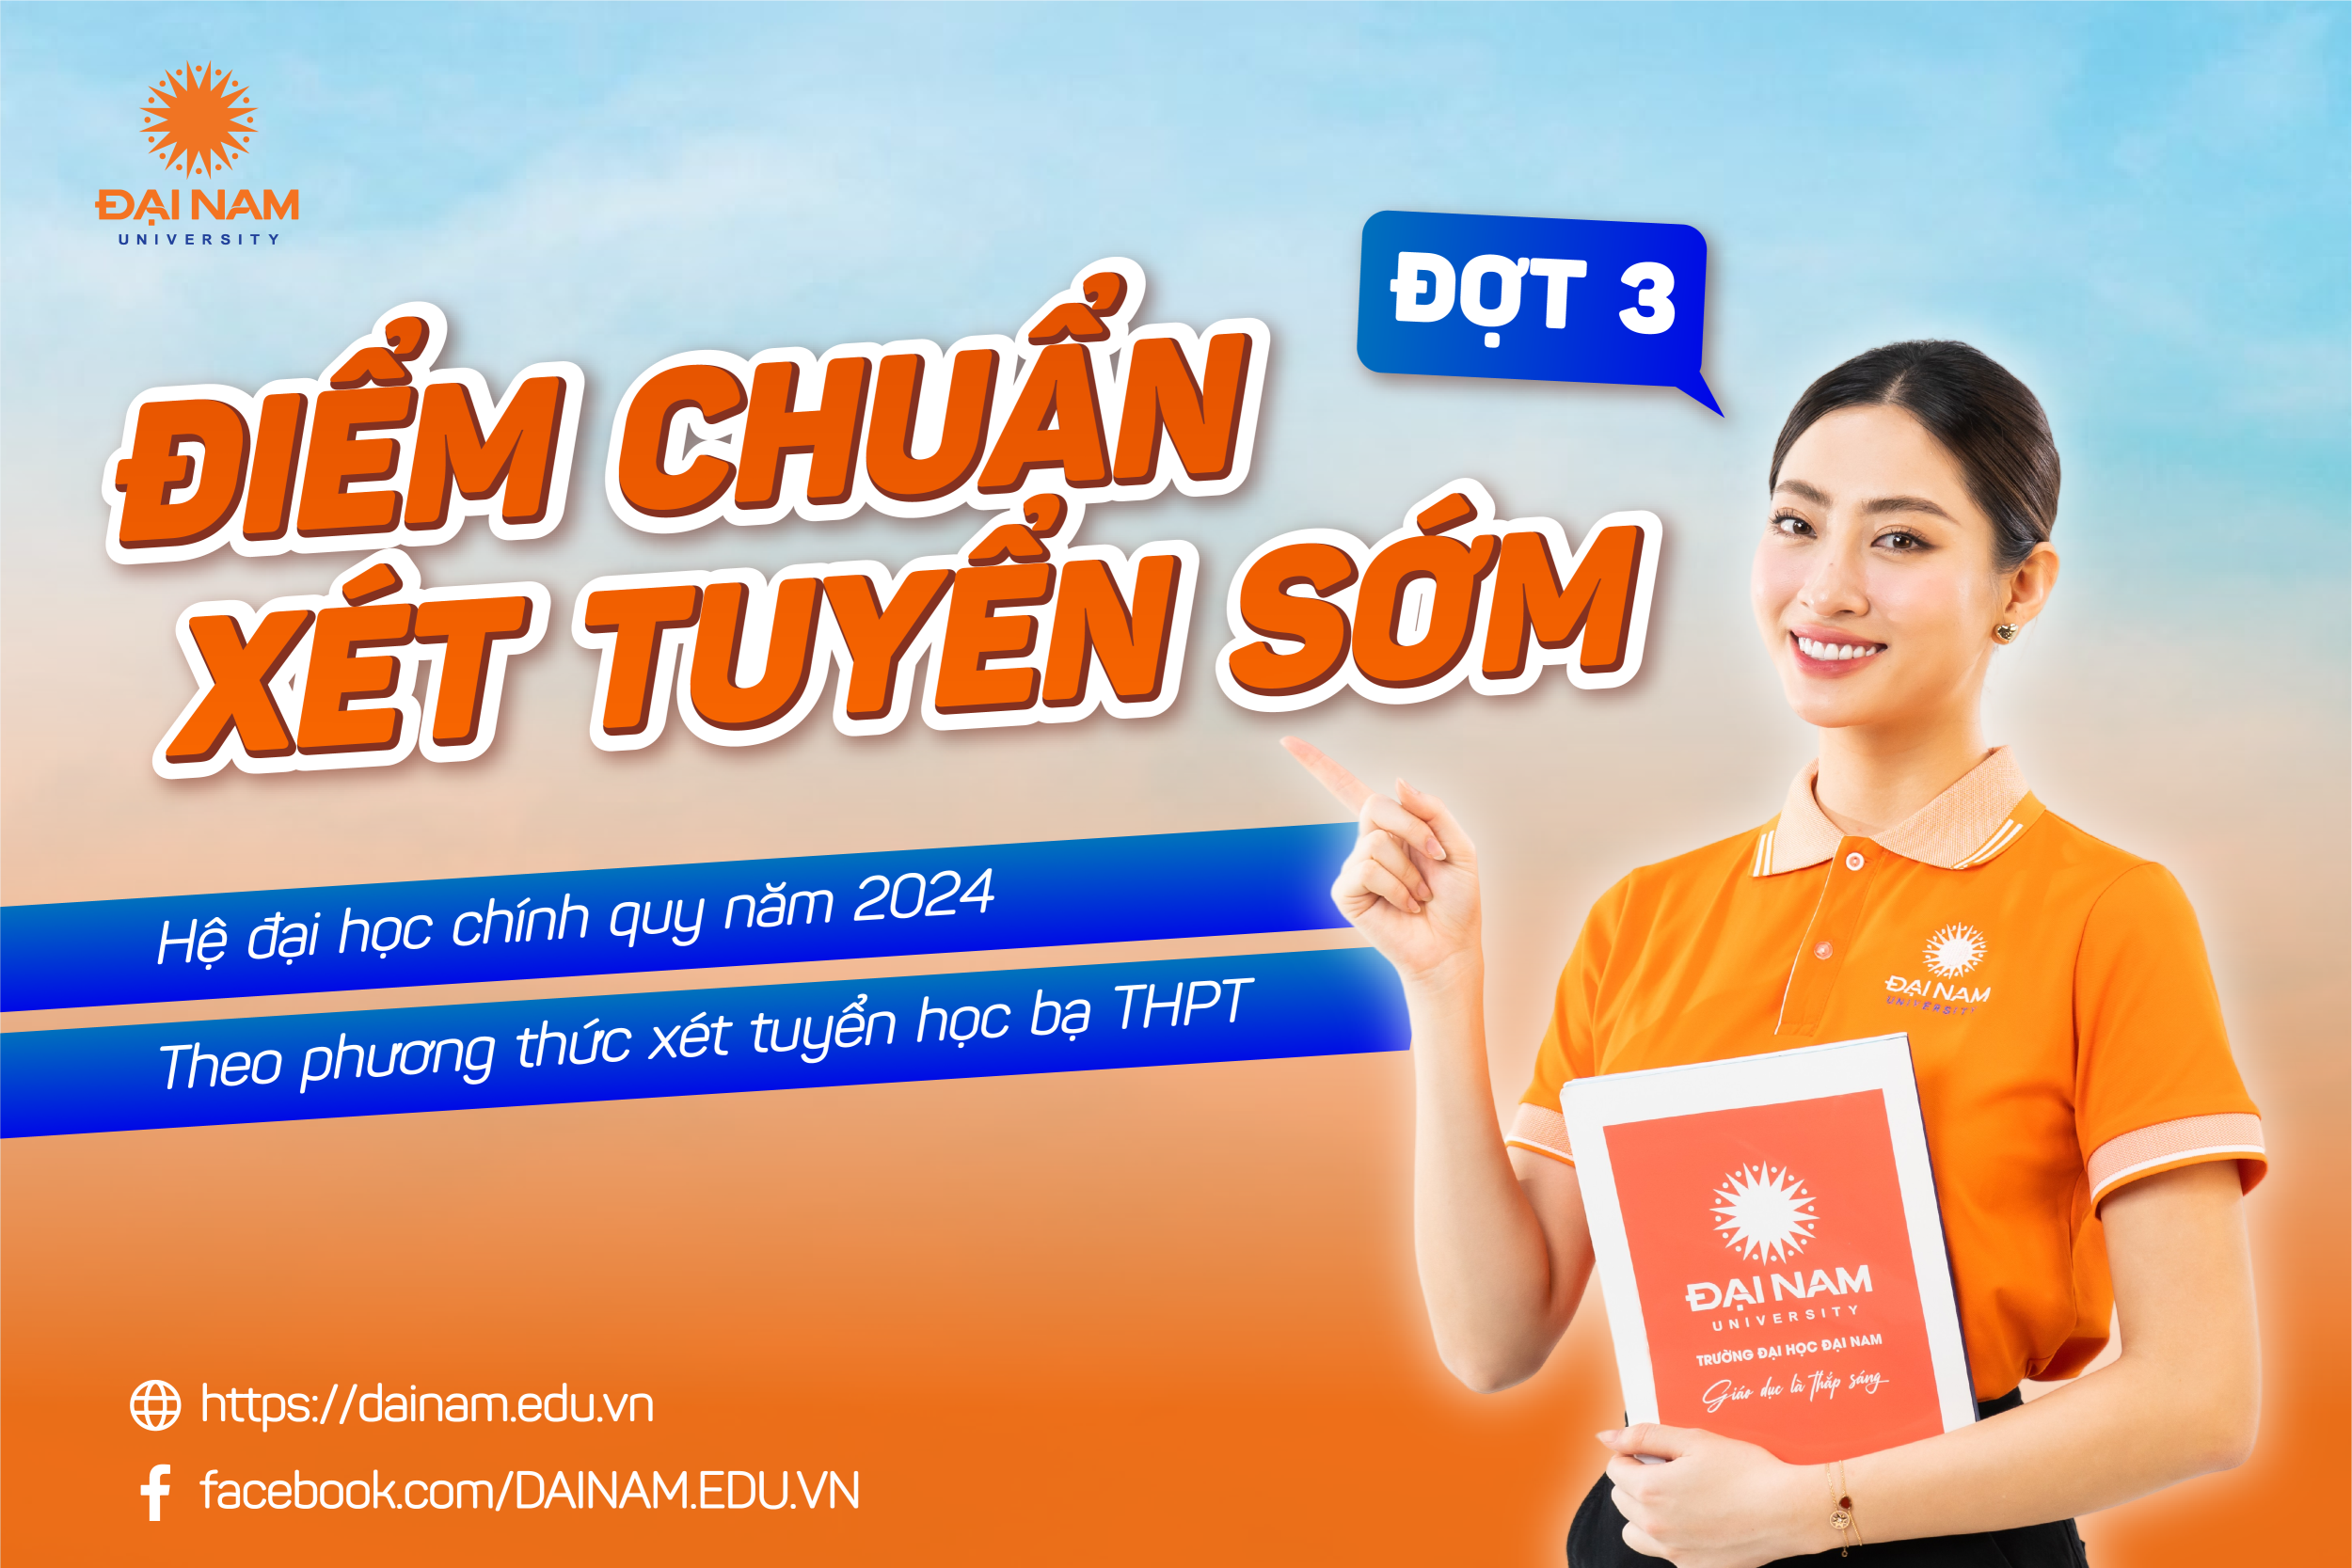 truong-dai-hoc-dai-nam-cong-bo-diem-chuan-xet-tuyen-som-dot-3-nam-2024